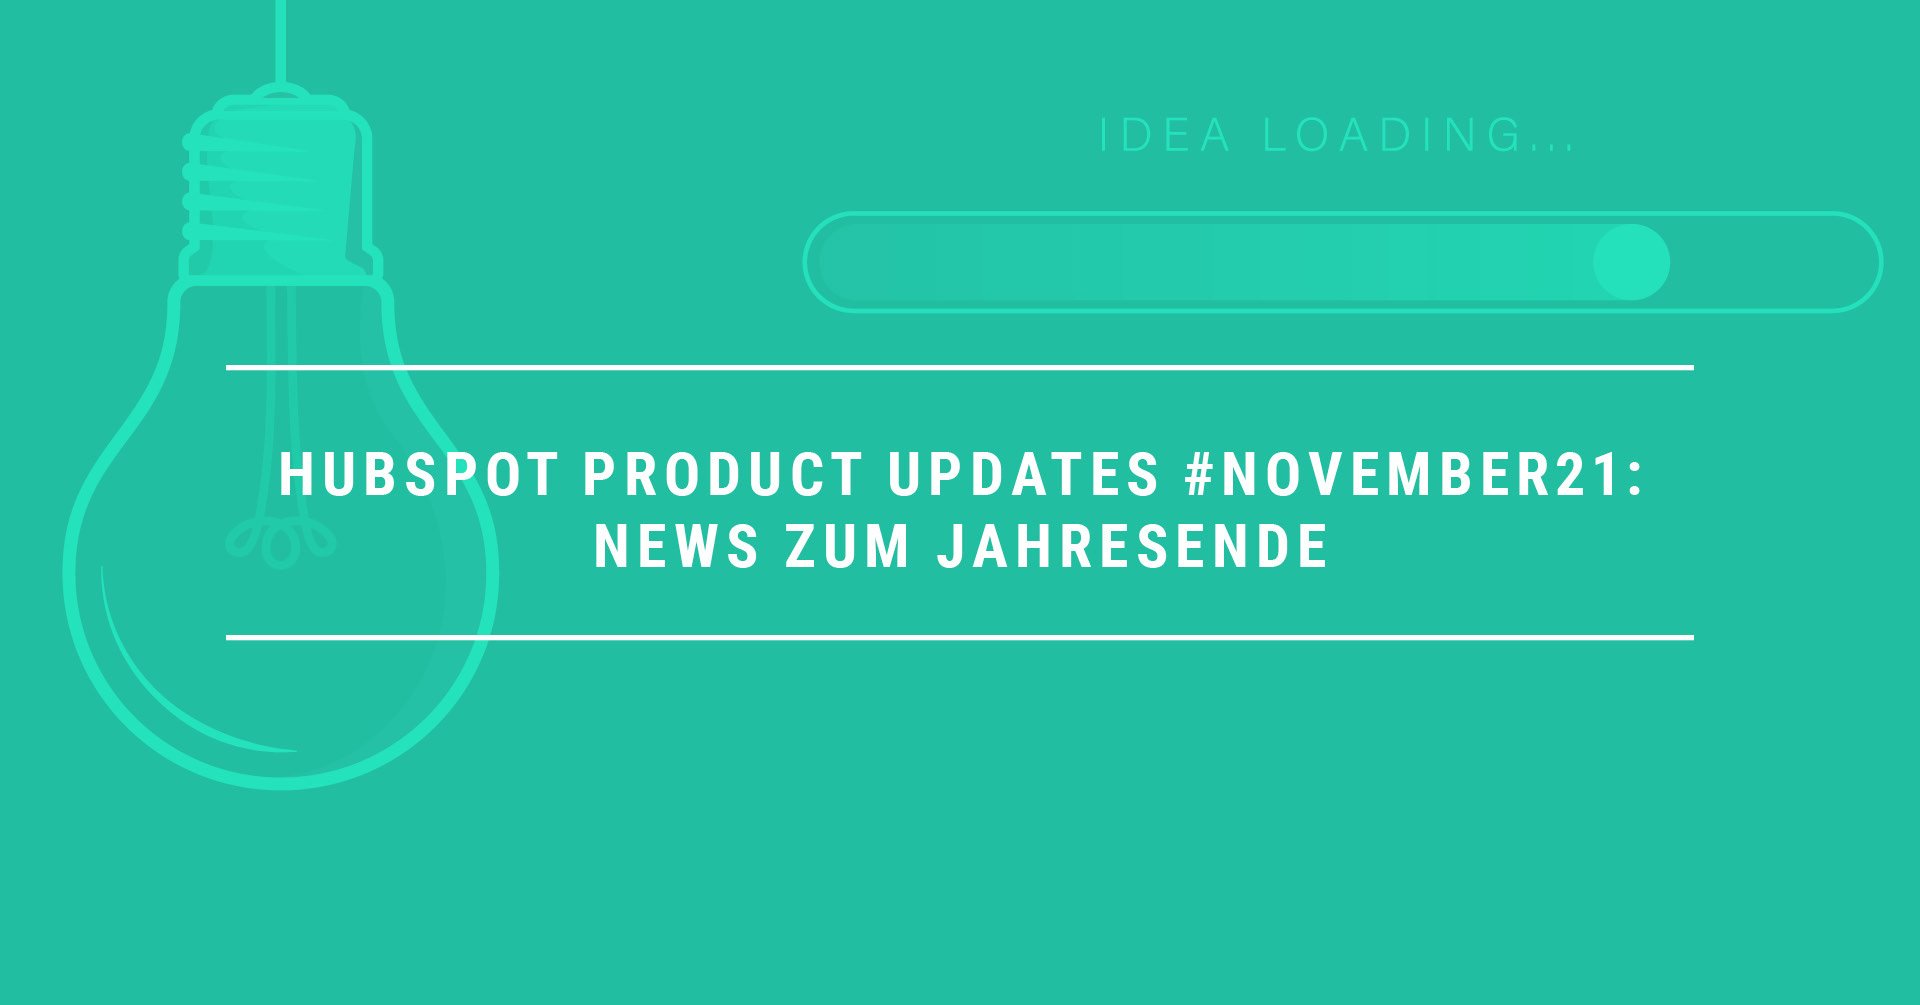 HubSpot Product Updates November 21